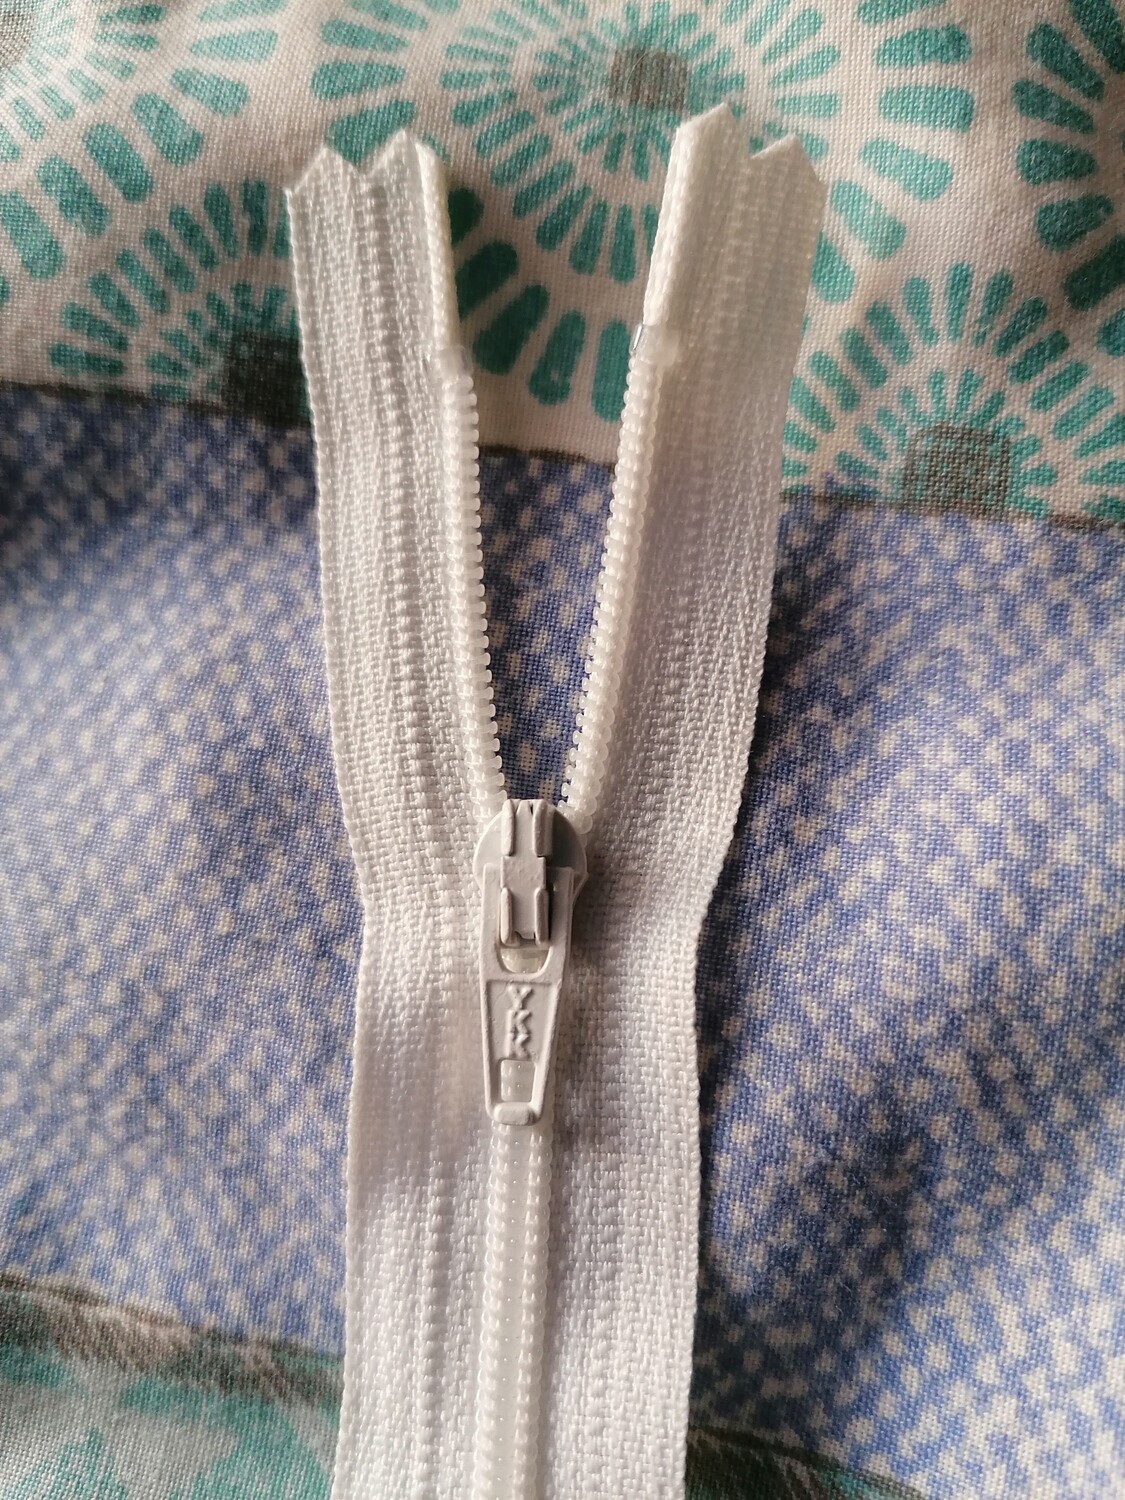 36cm (14") nylon closed end zip